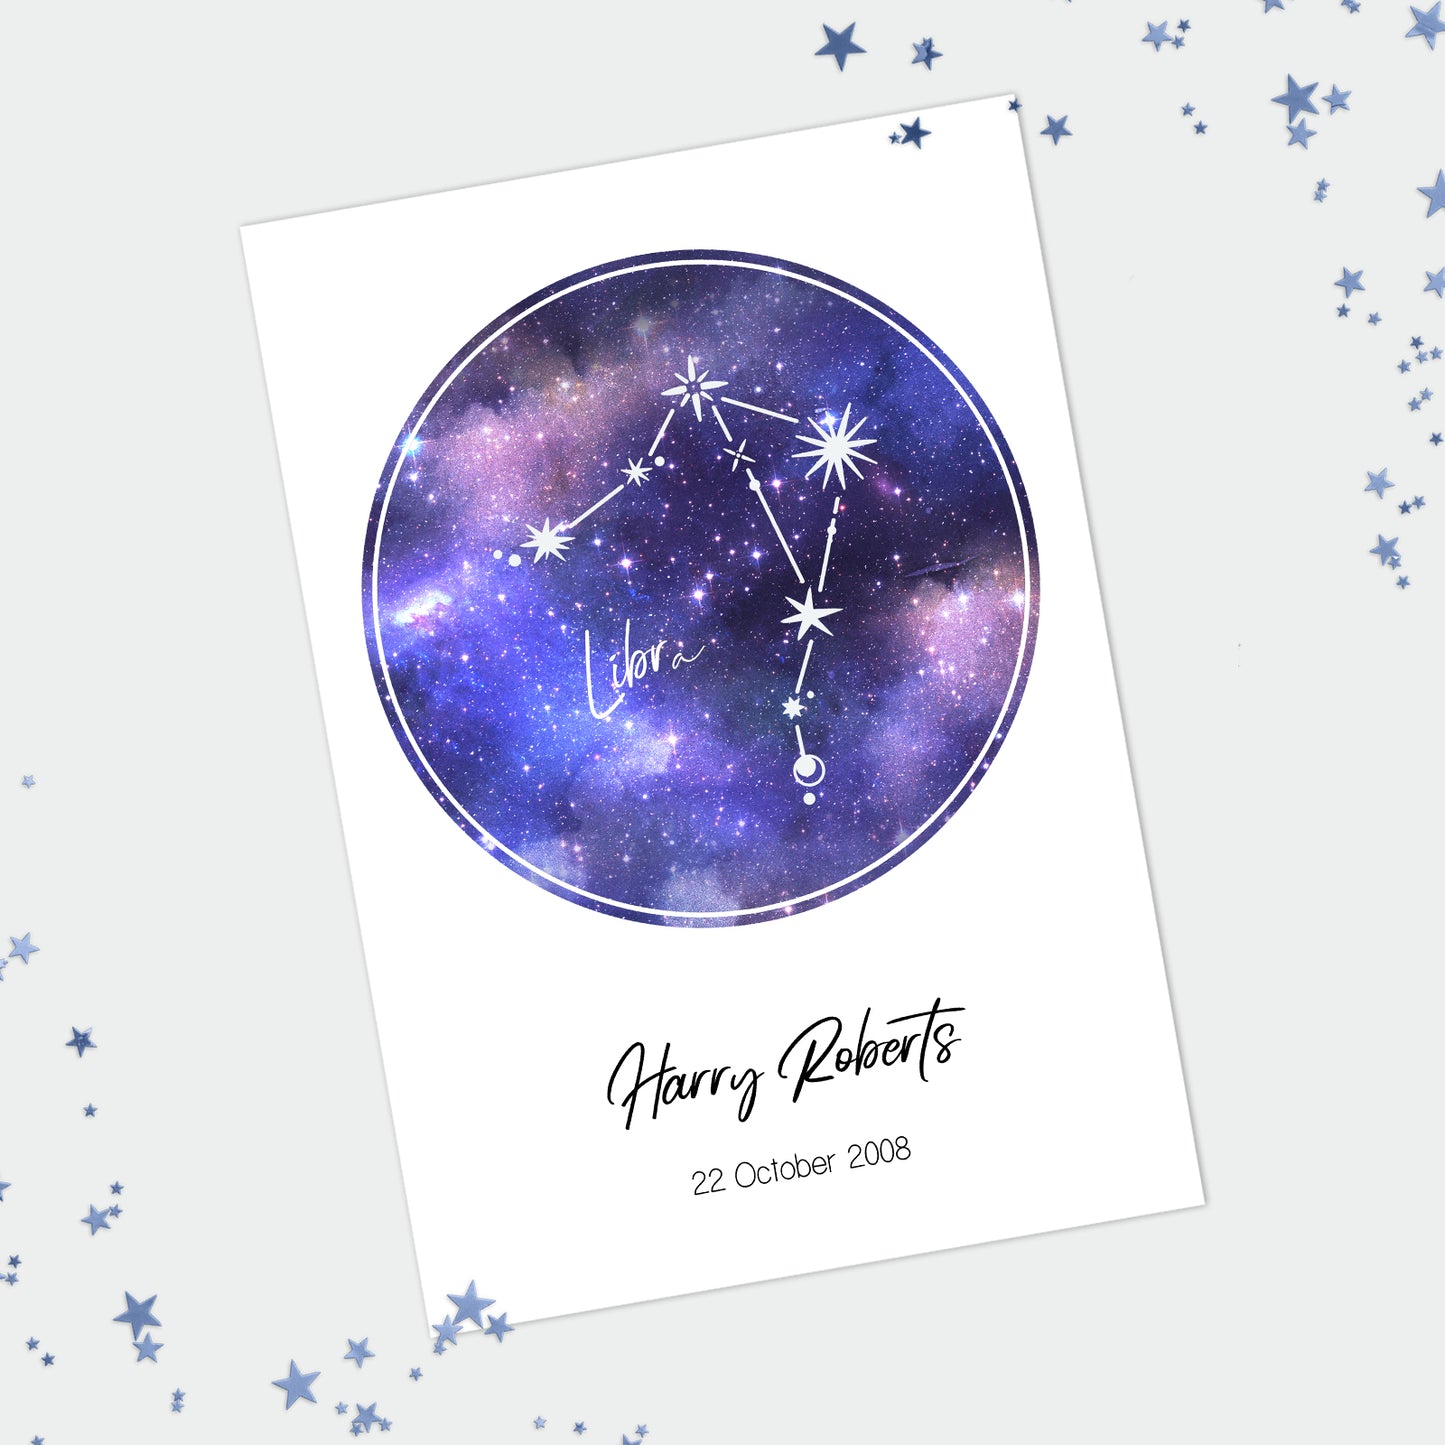 Personalised Libra Star Constellation Print